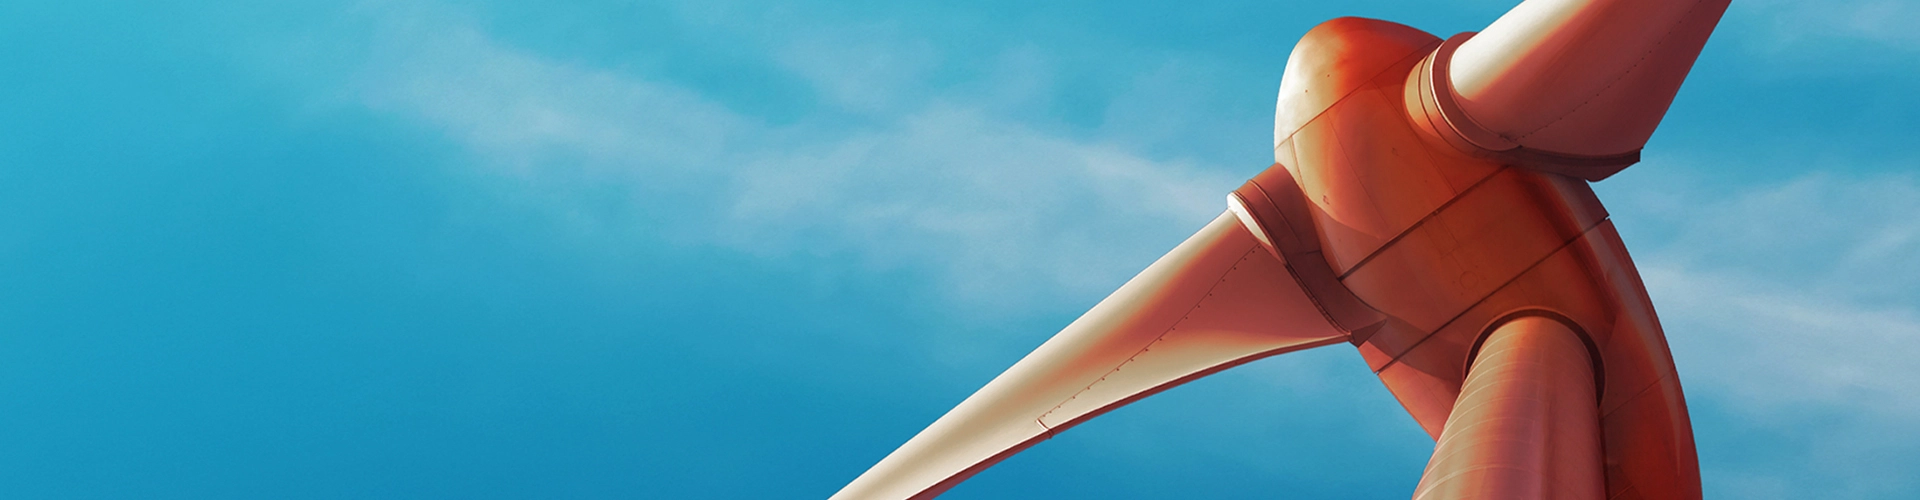 Blog Hero Wind Turbine - Copperleaf Decision Analytics